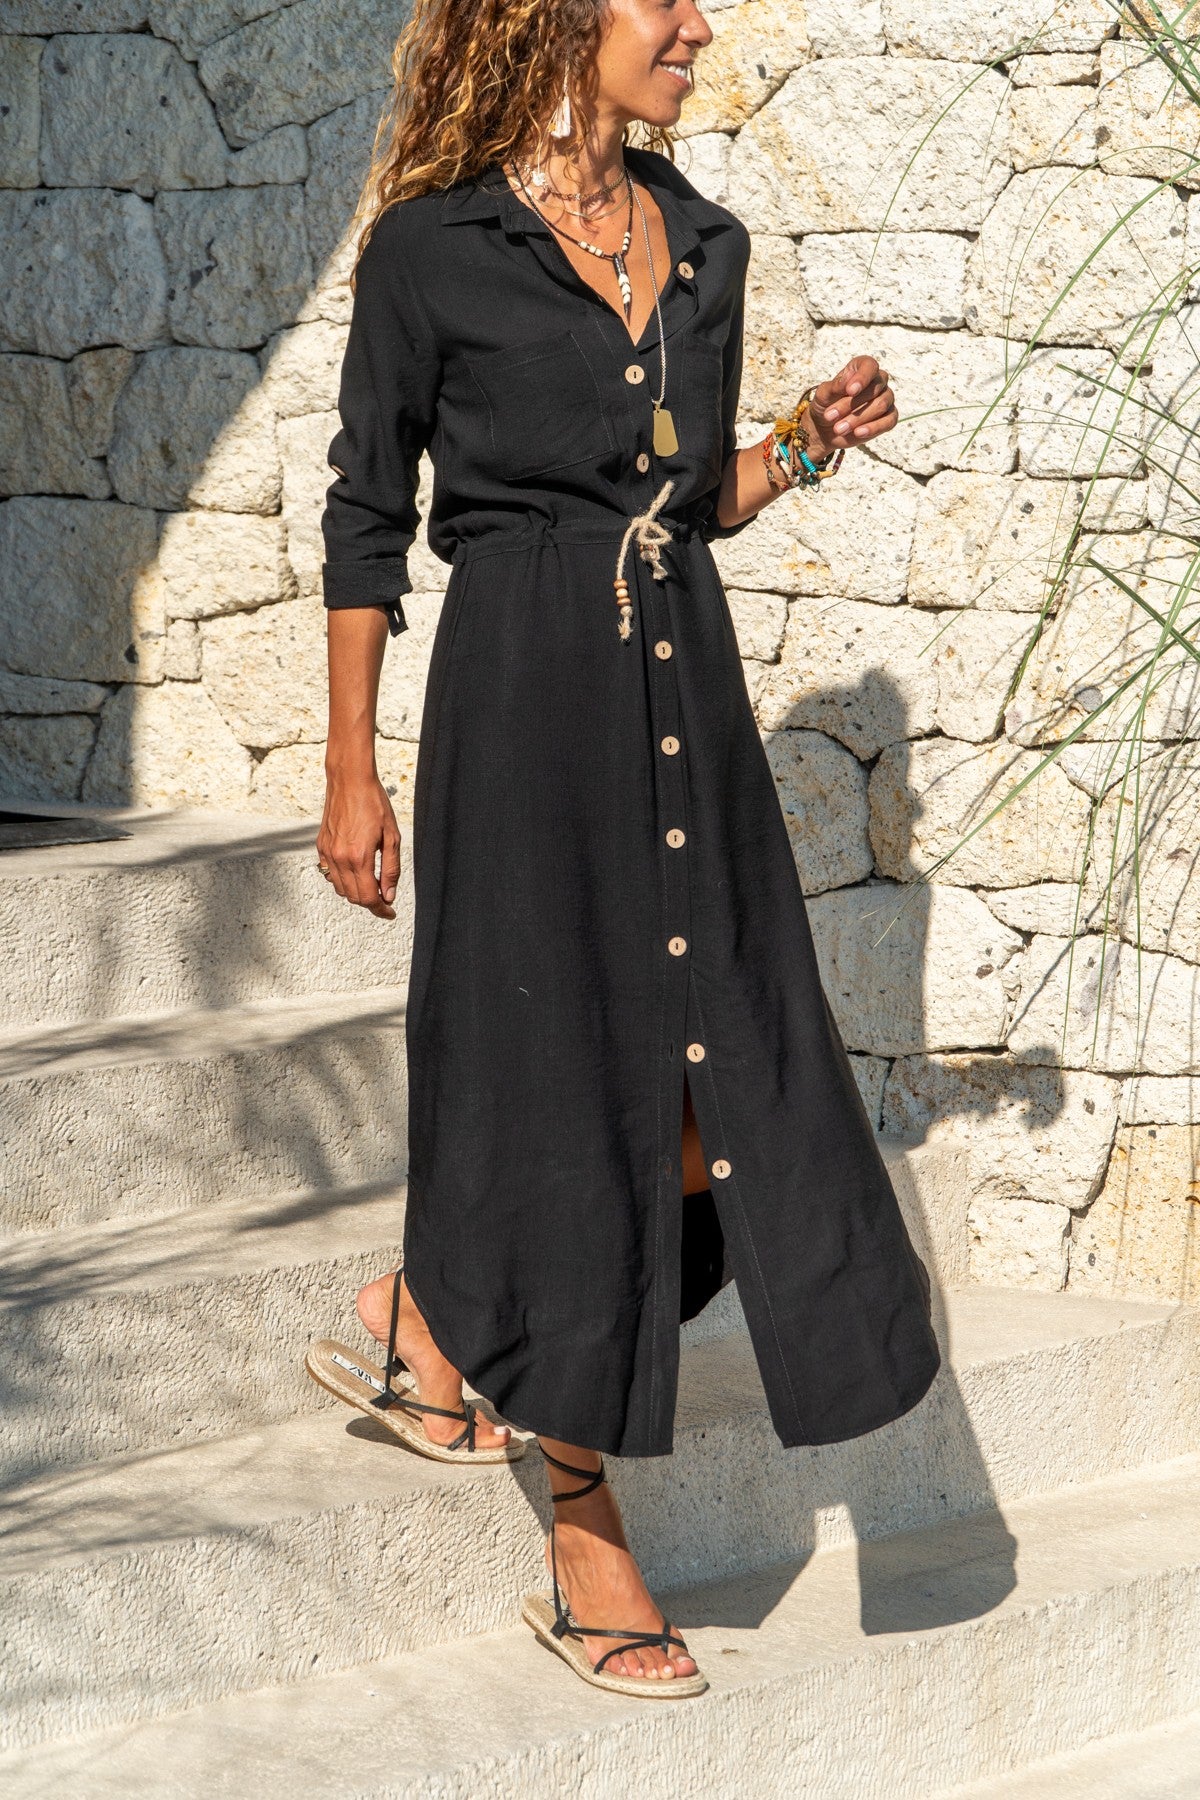 Bohemian style women's dress, New season black dress, Classic